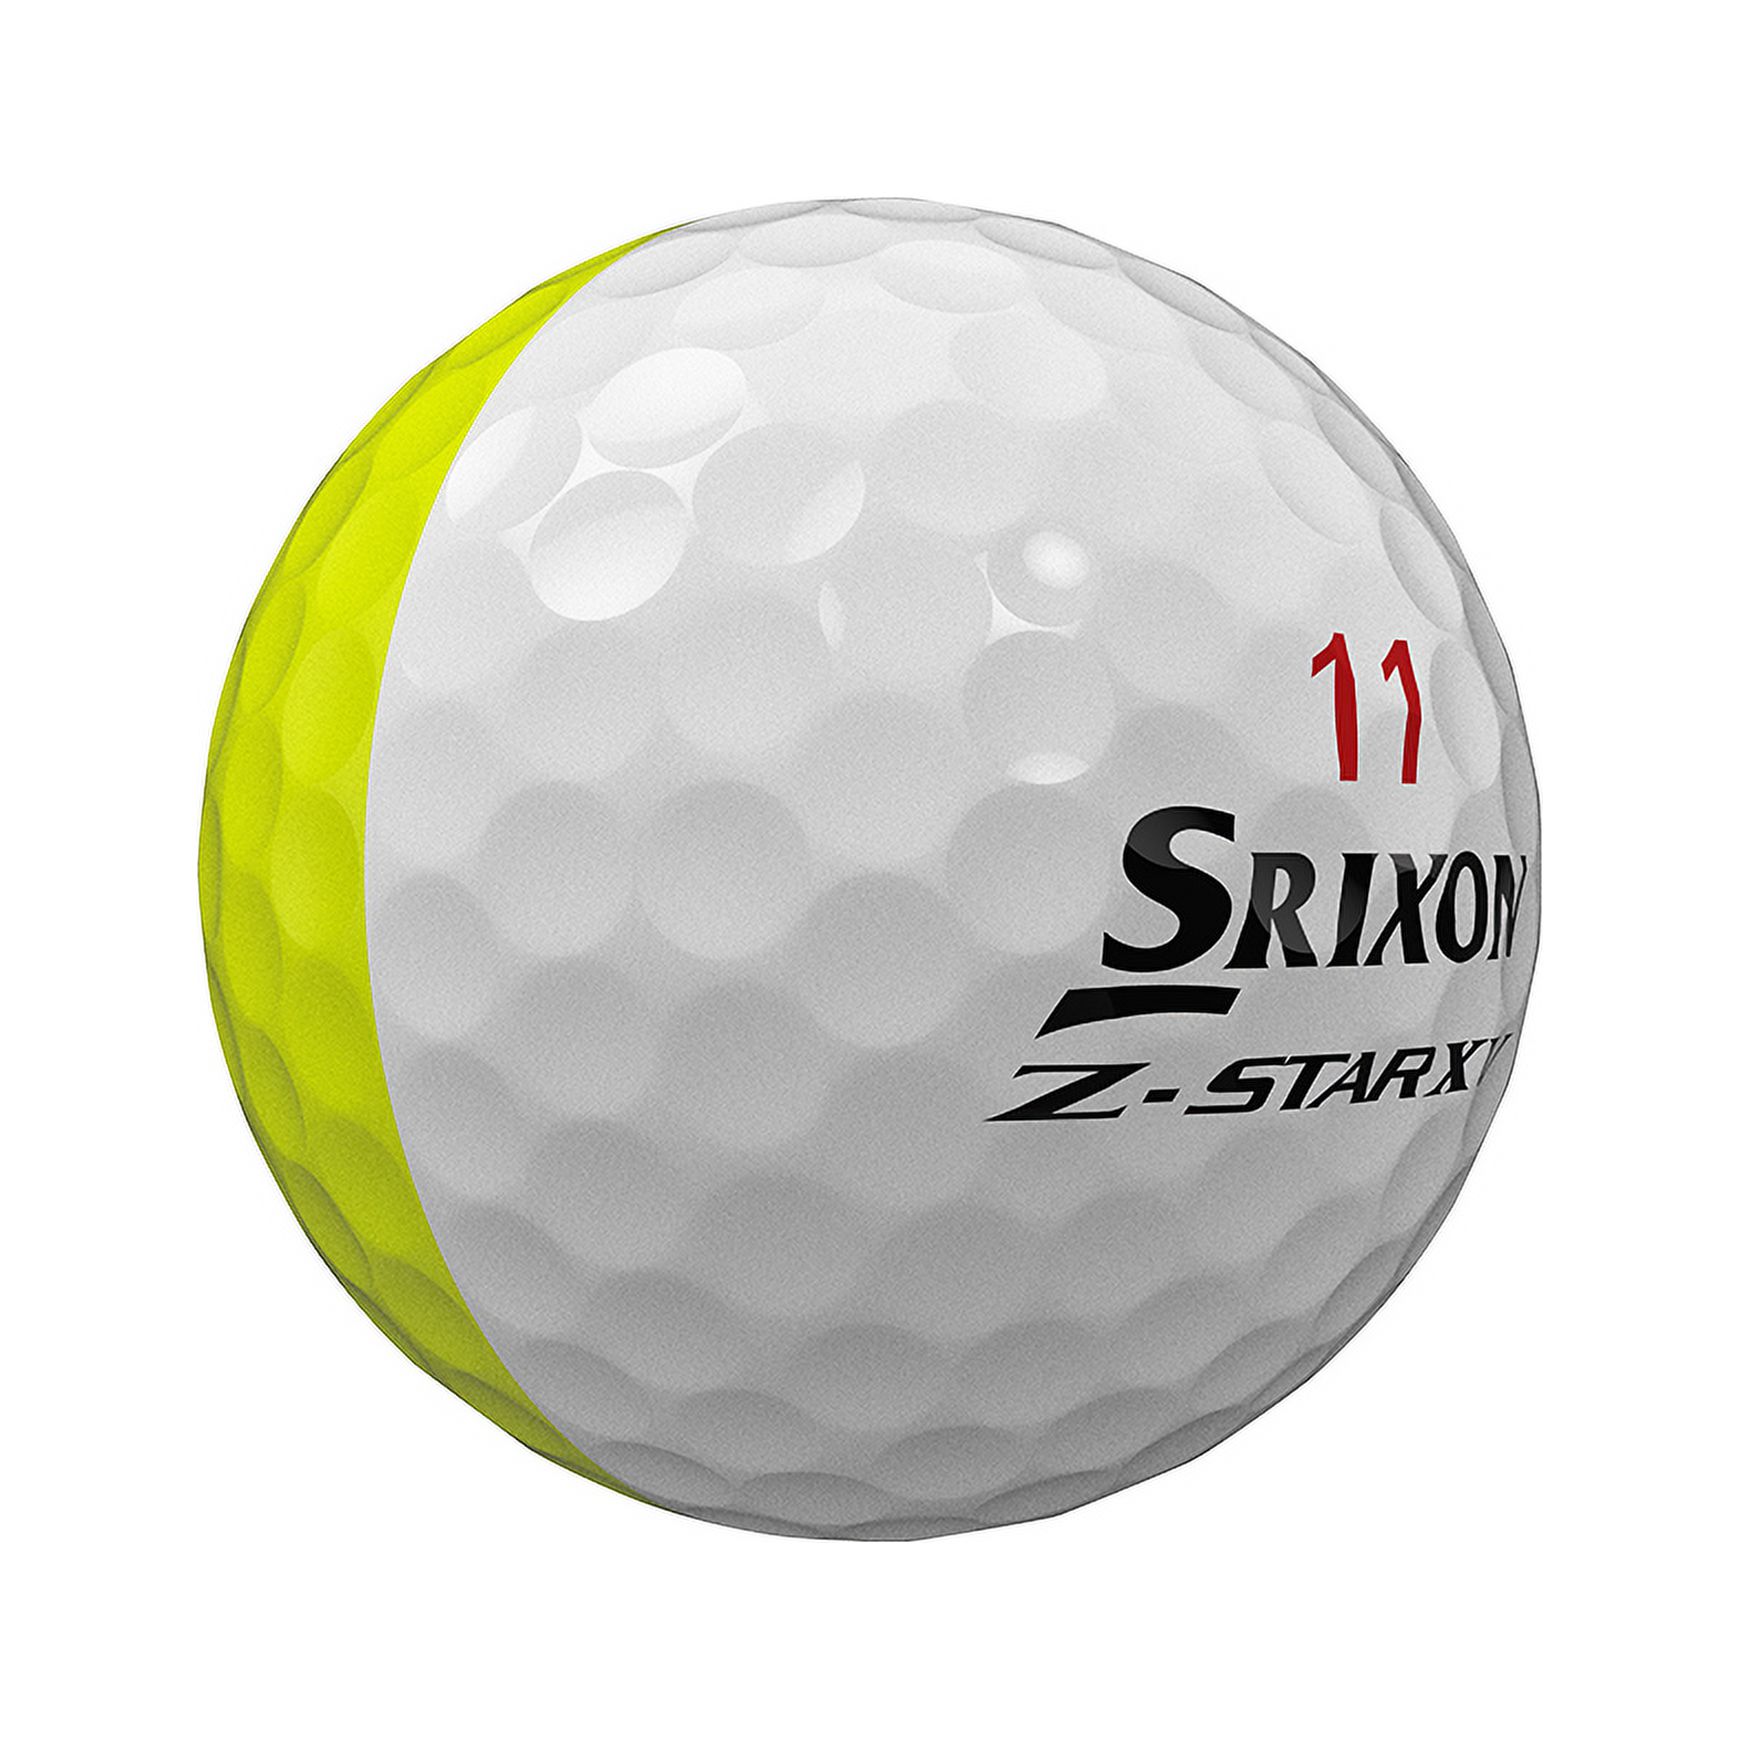 Srixon Z-Star XV Divide Golf Ball White-Yellow Dozen - image 2 of 2